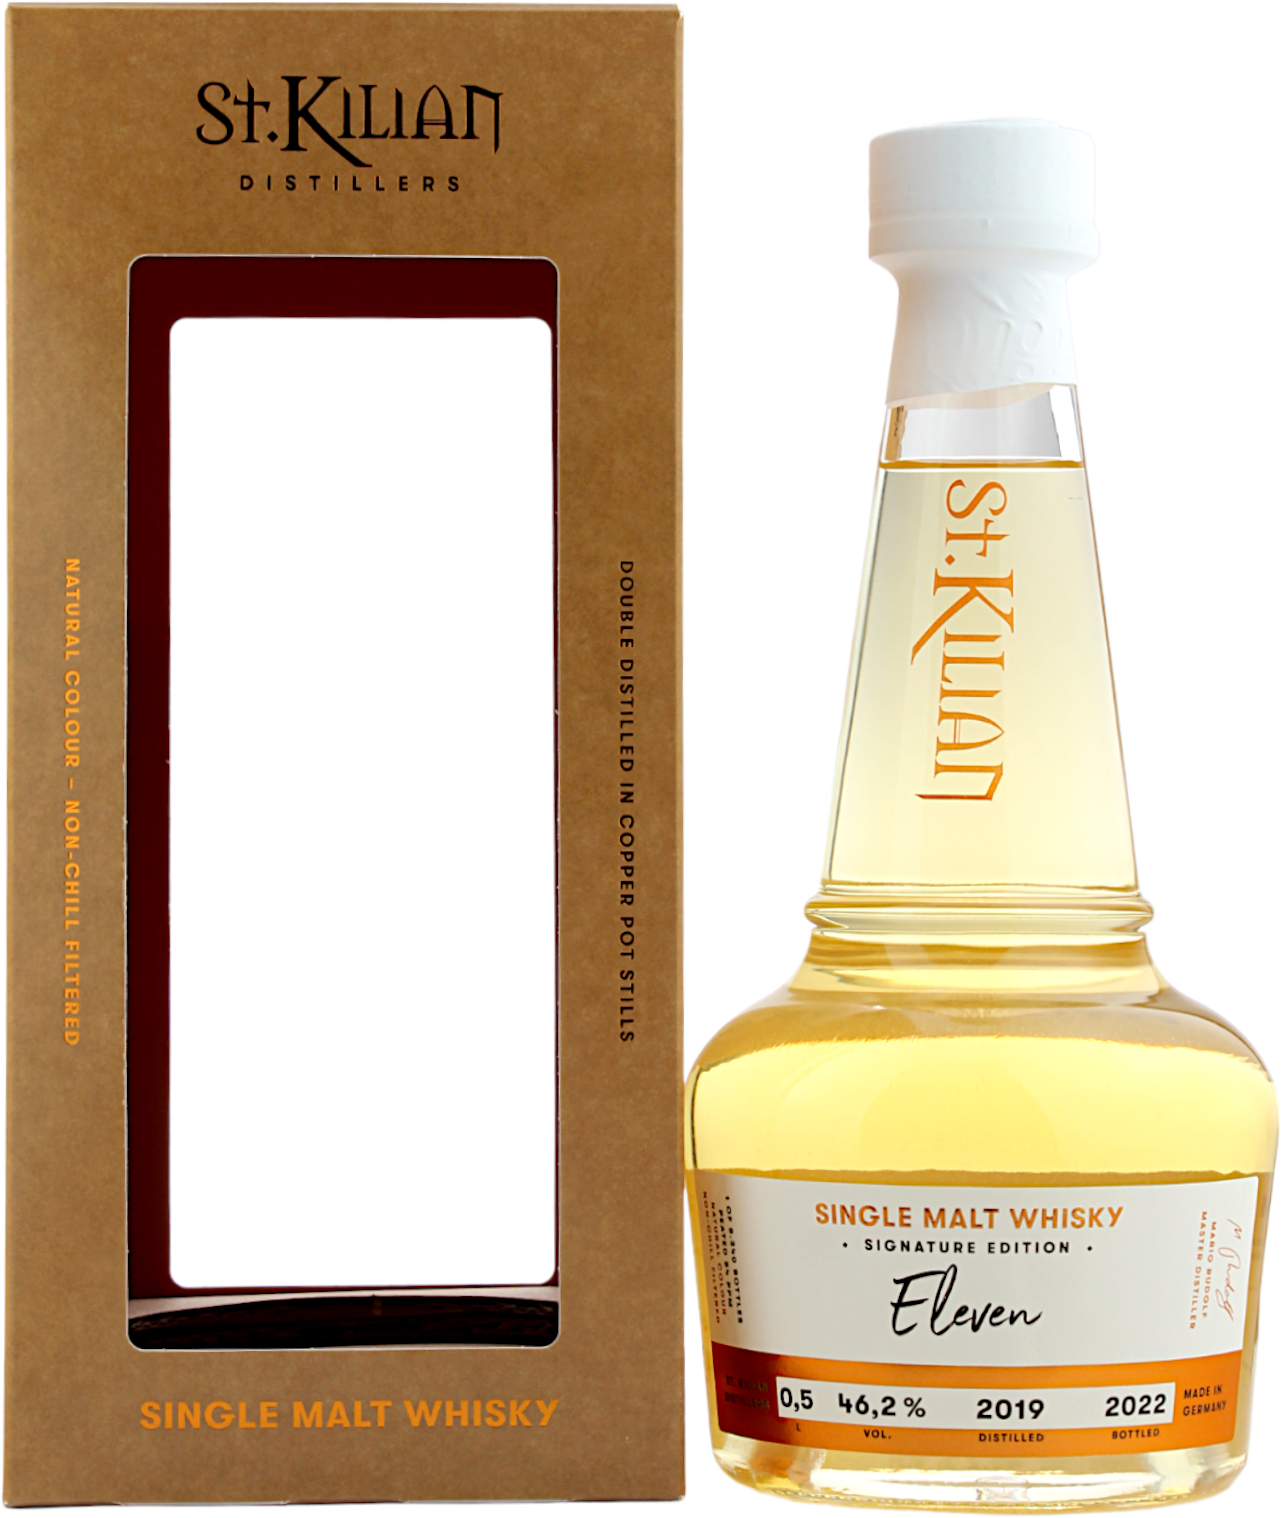 St. Kilian Signature Edition Eleven Peated Bourbon Cask 46.2% 0,5l